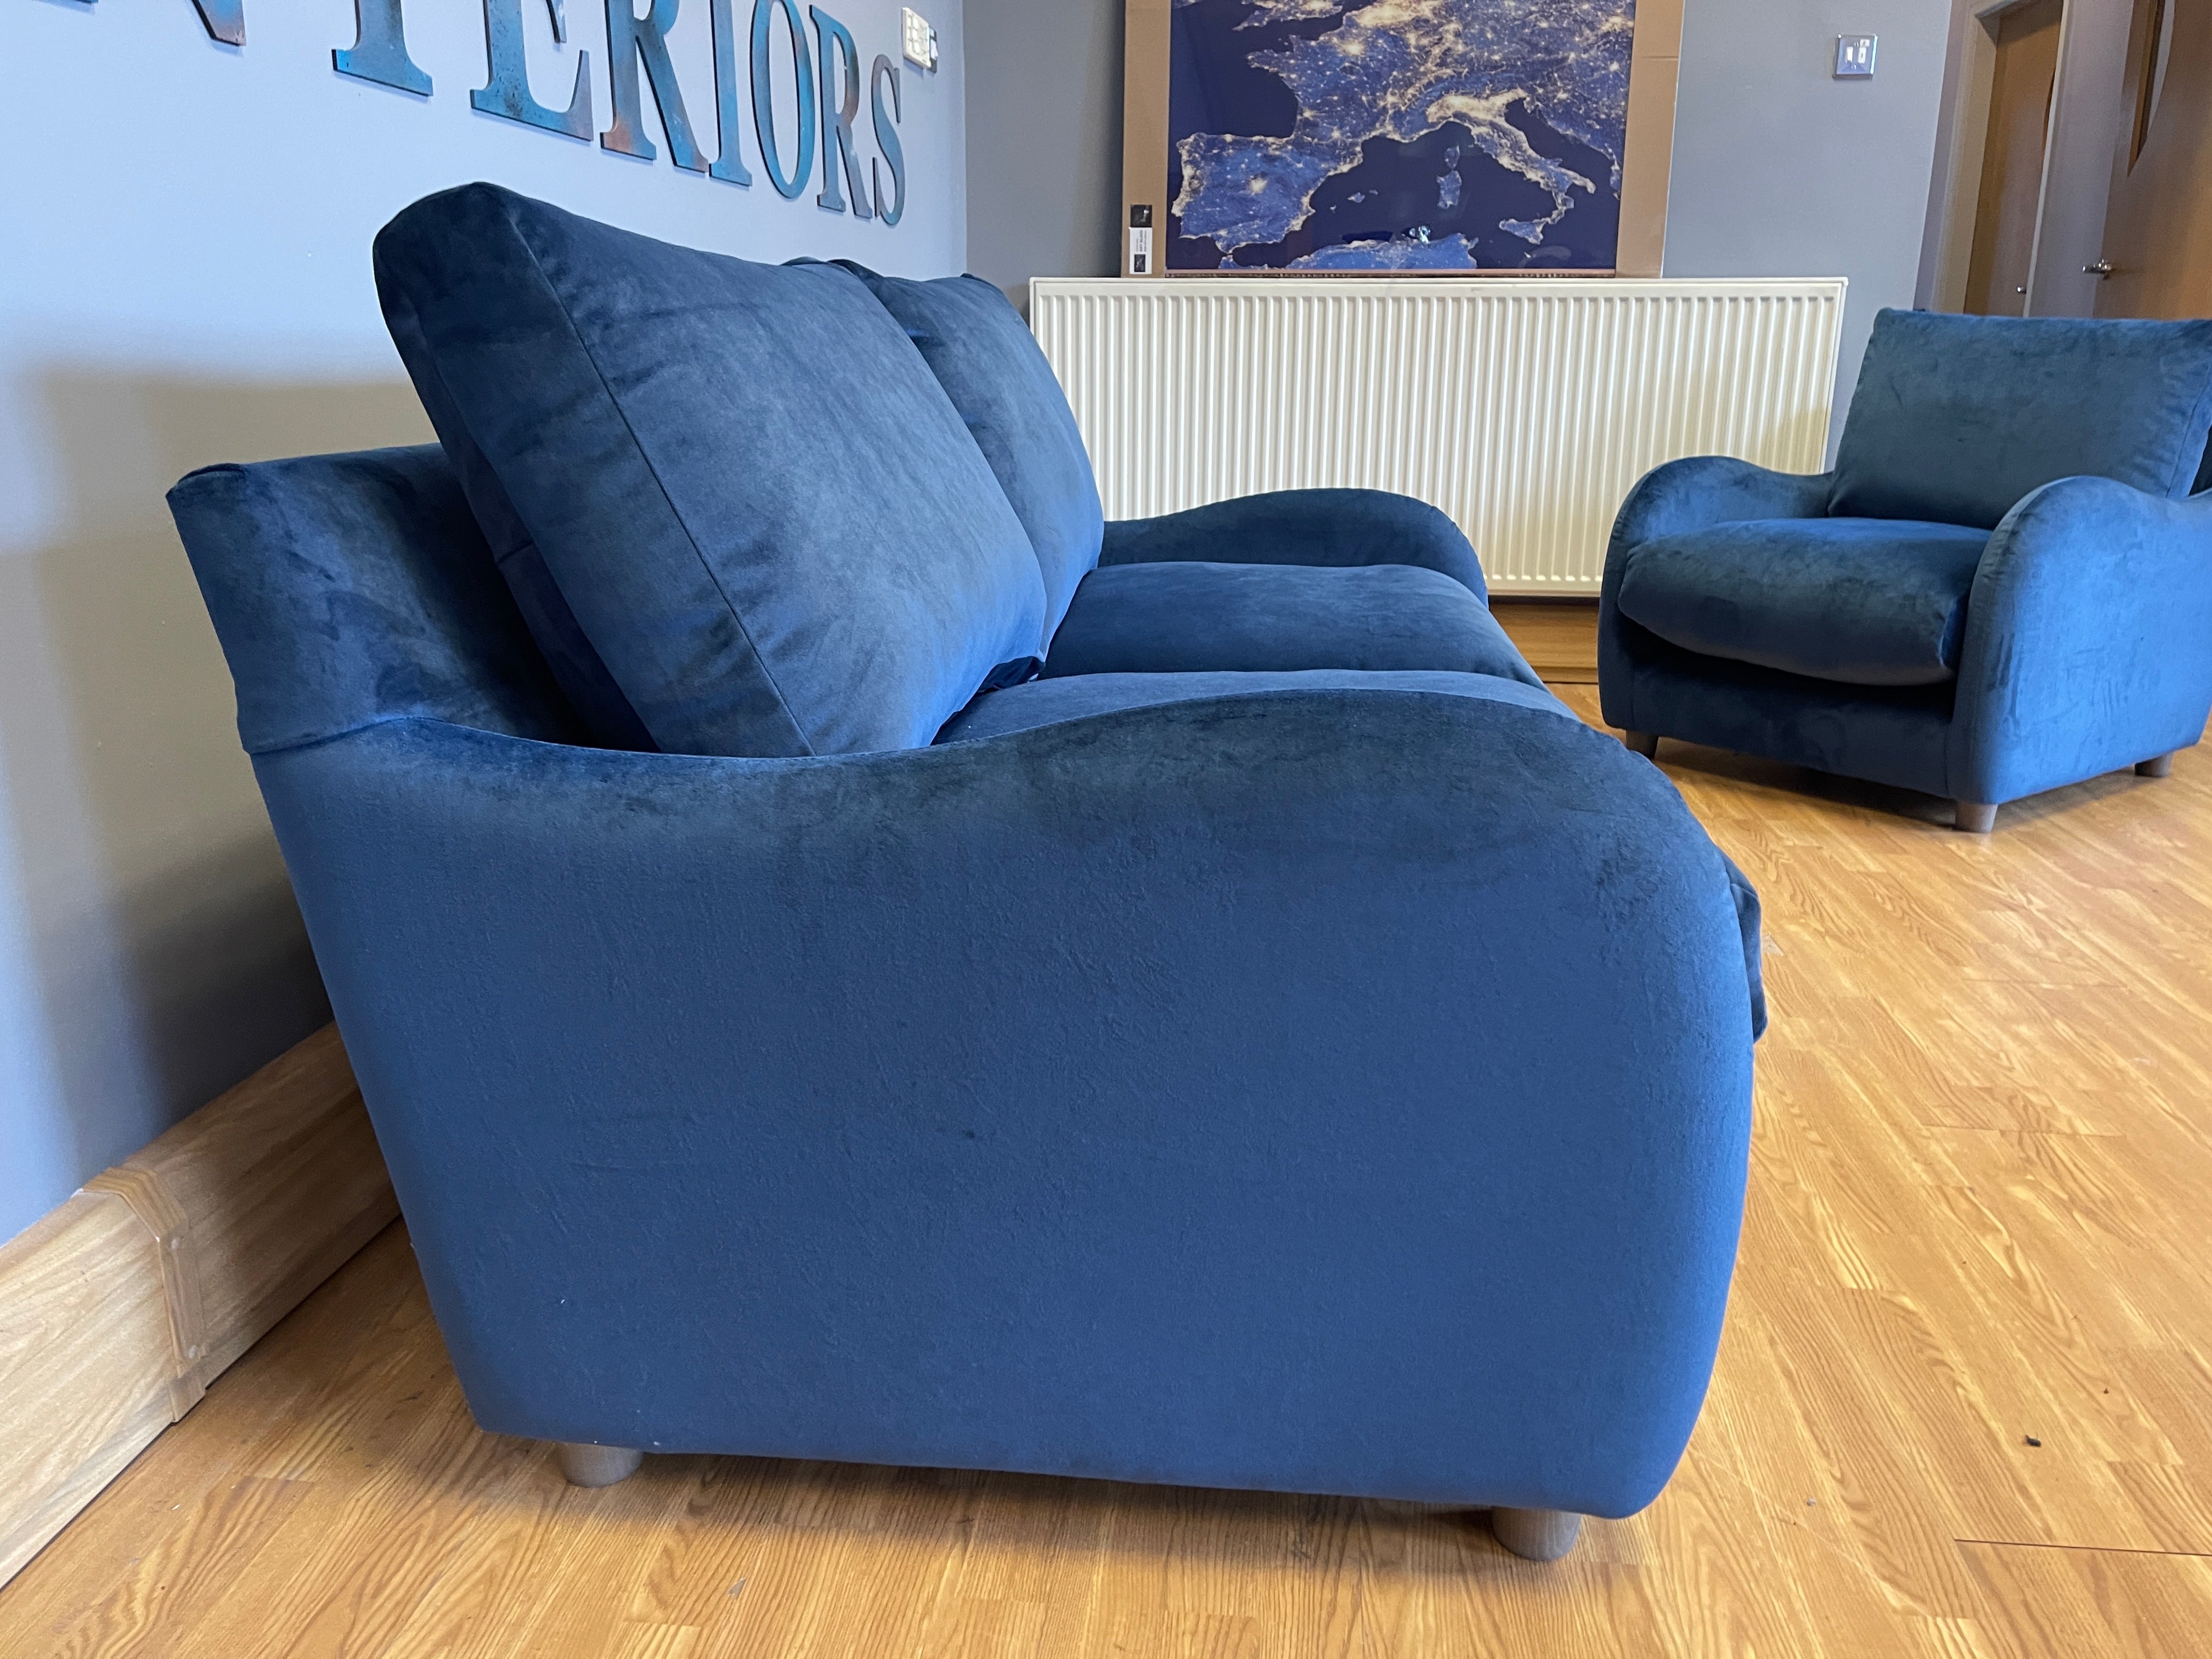 ROCKET ST GEORGE SOPHIE 2 seater sofa in plush royal blue velvet fabric